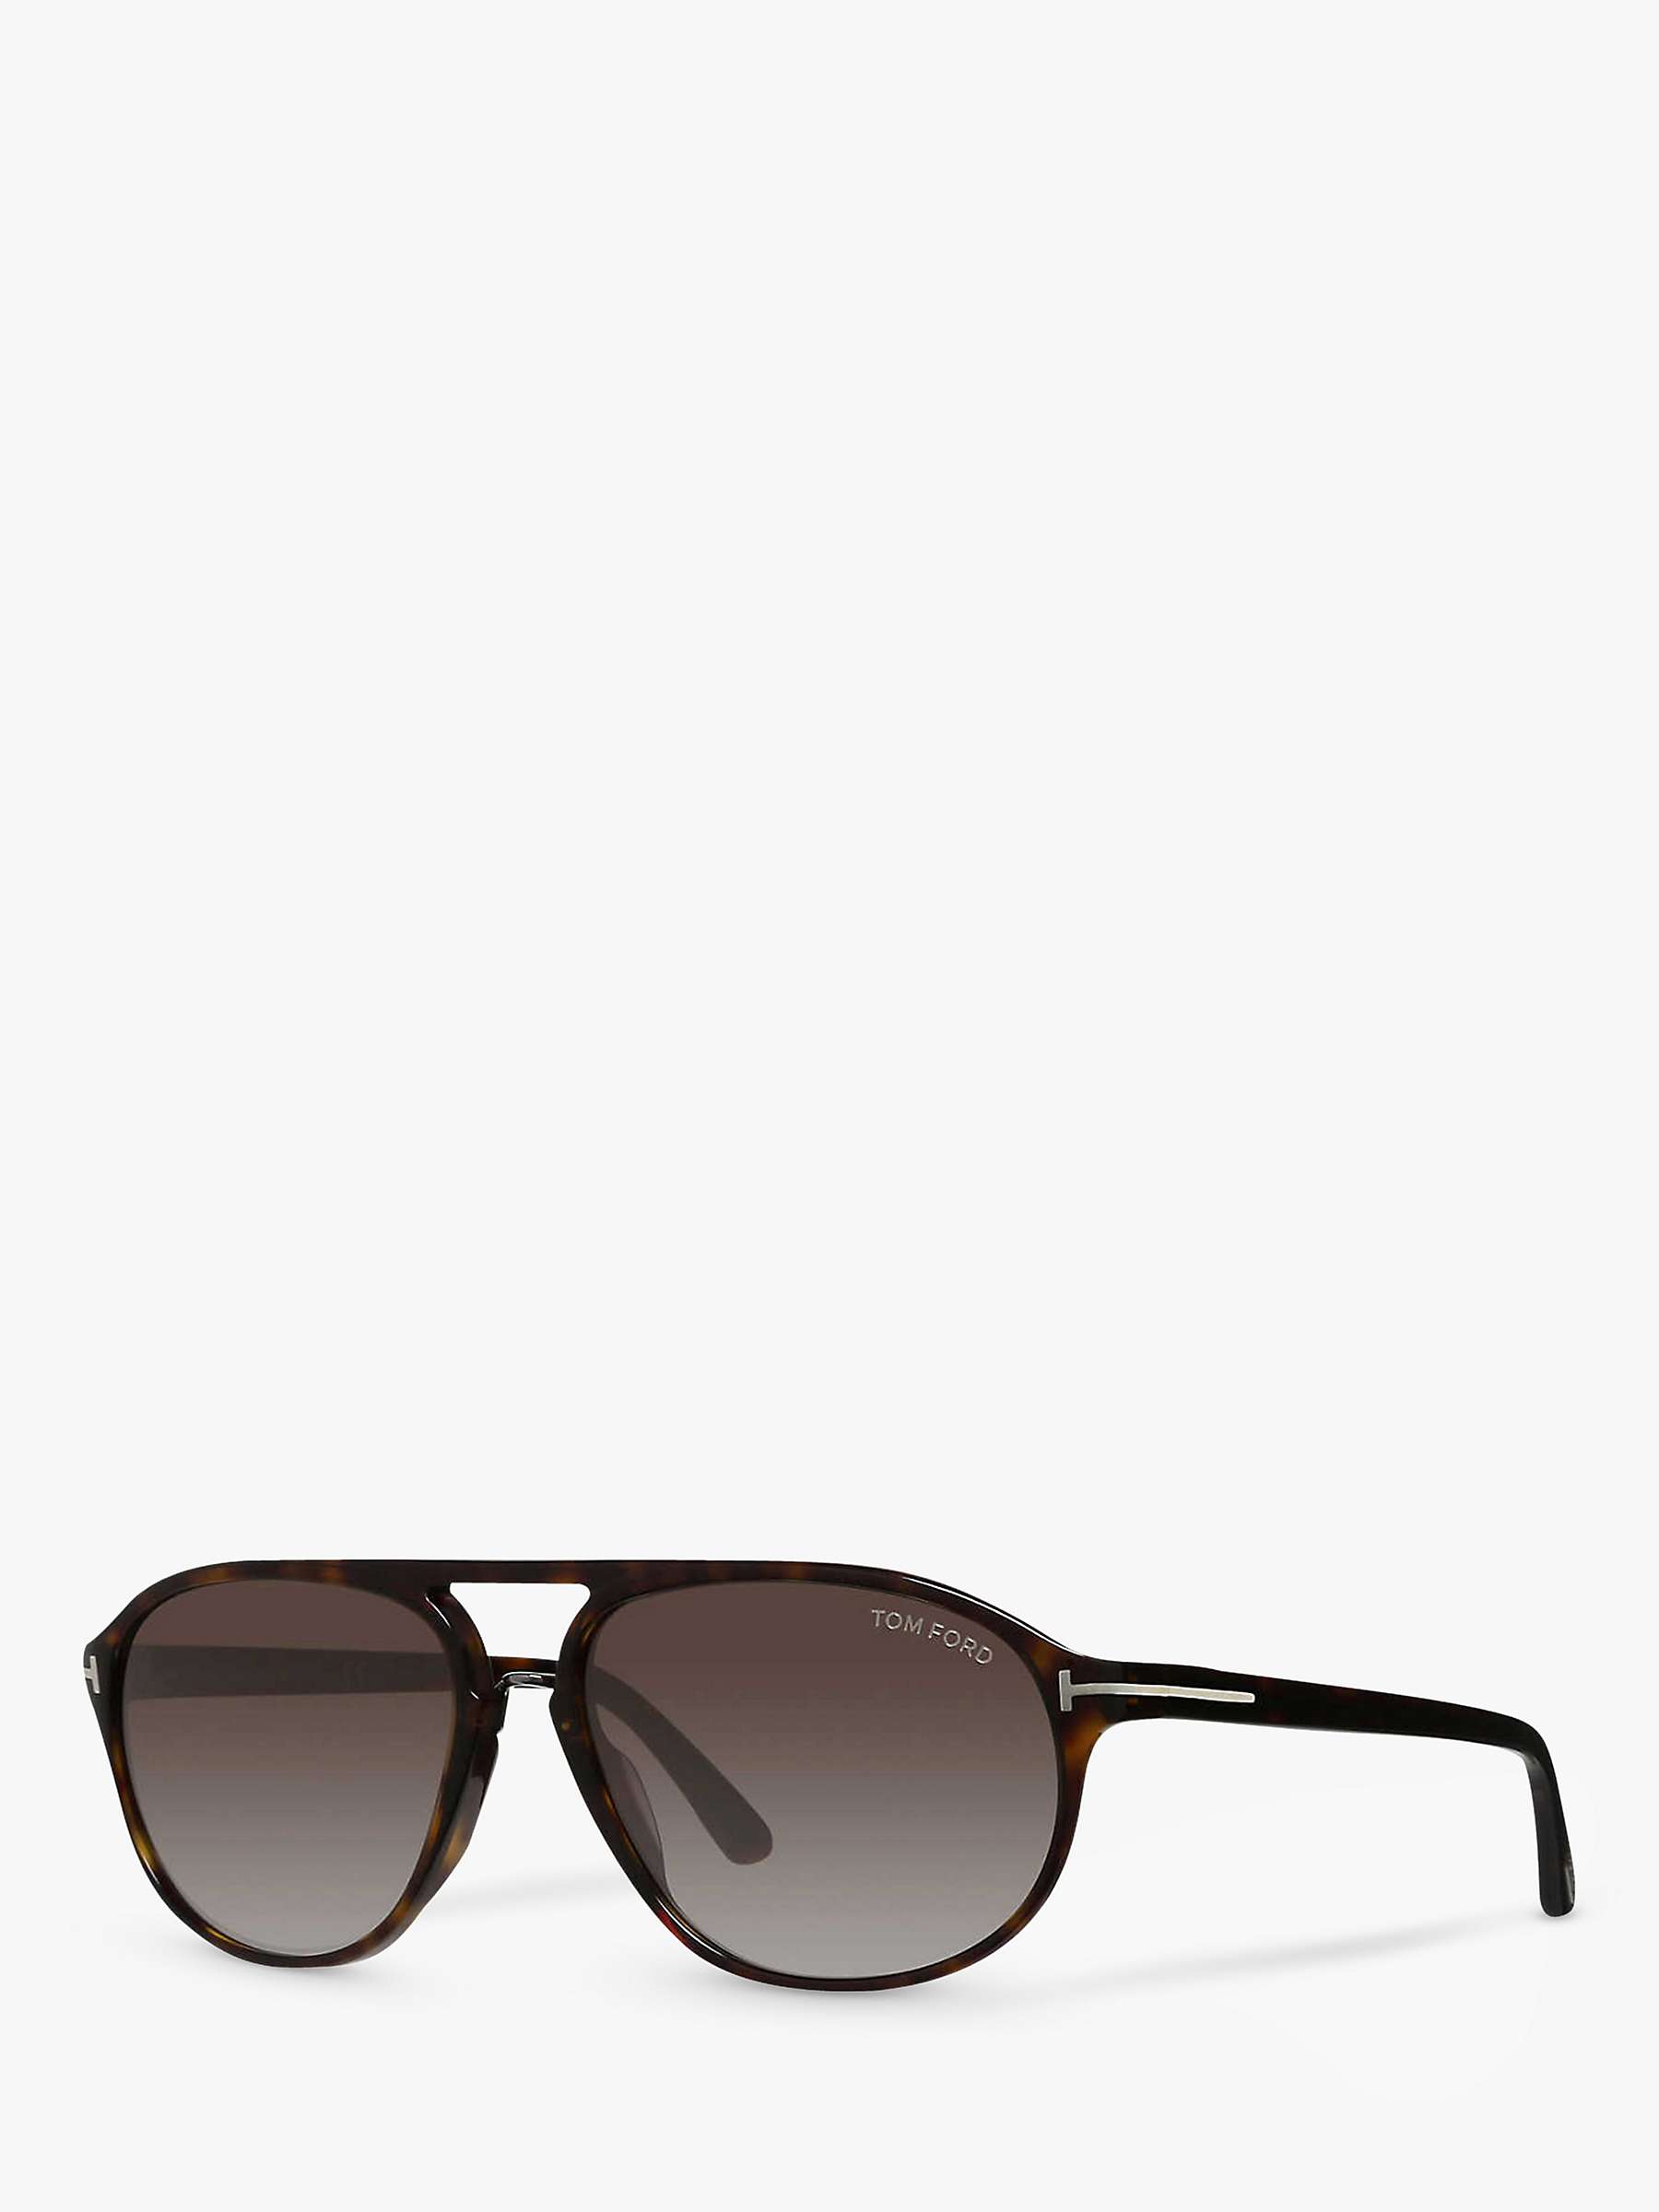 Buy TOM FORD FT0447 Jacob Gradient Aviator Sunglasses, Brown Online at johnlewis.com